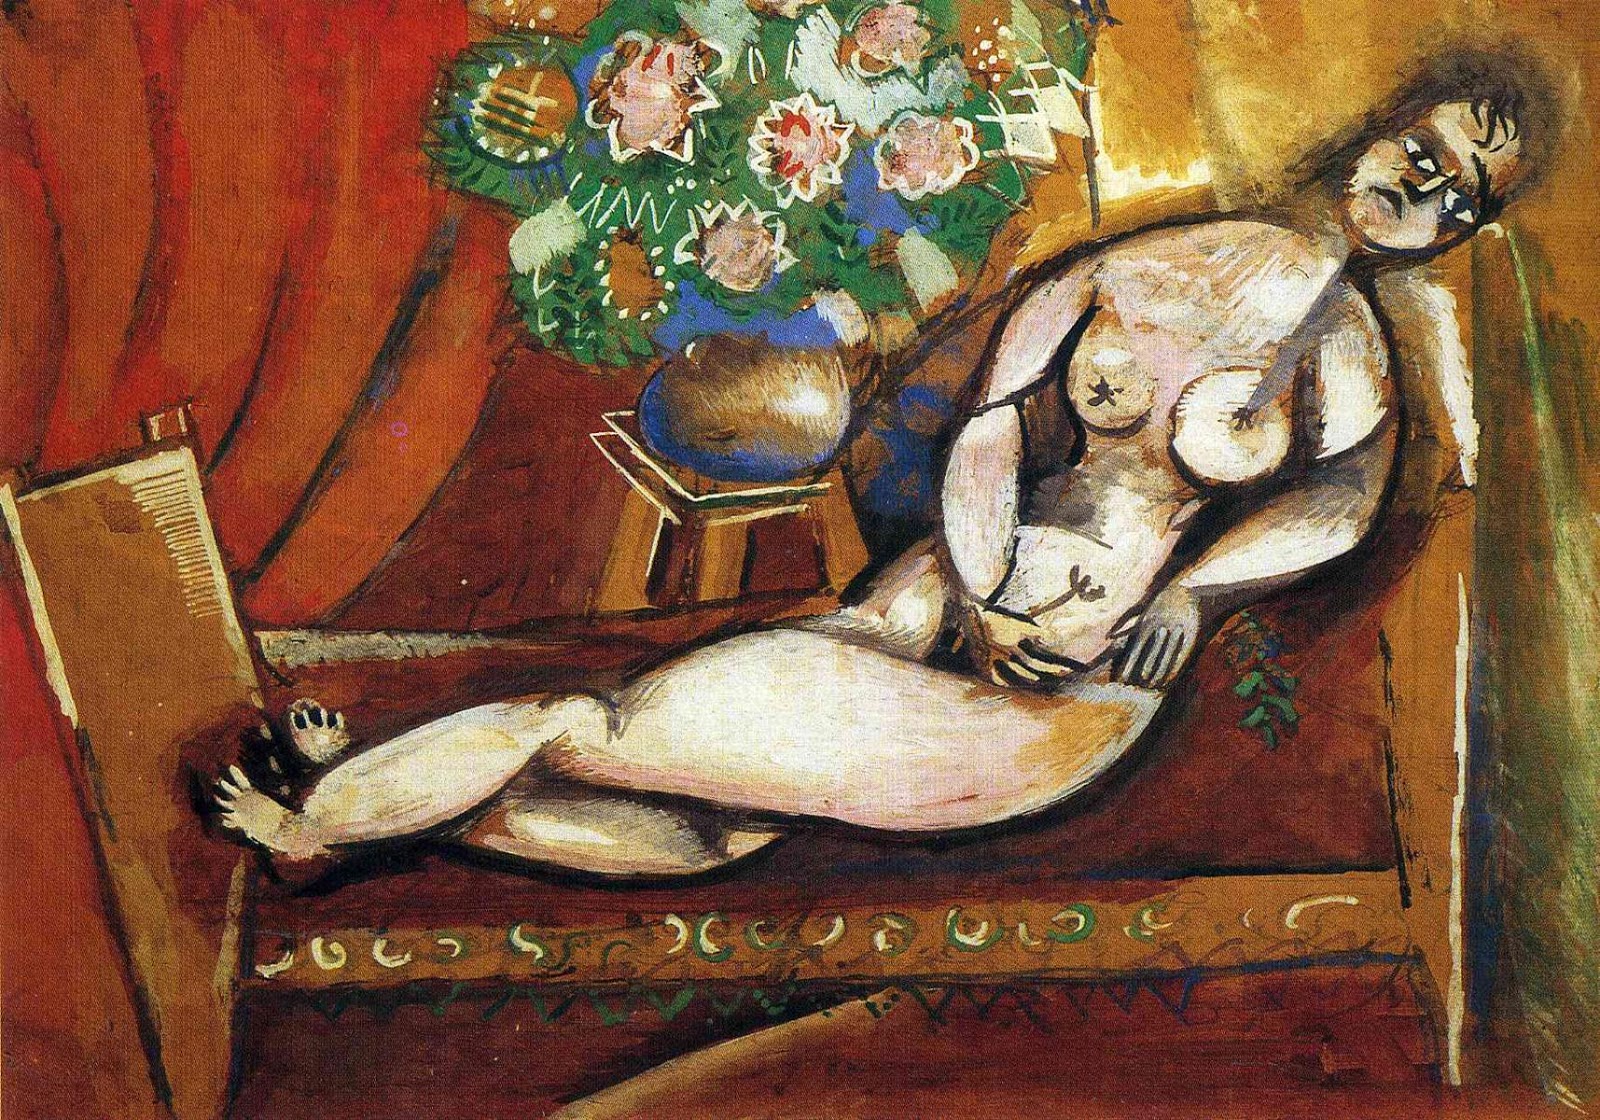 Marc+Chagall-1887-1985 (389).jpg